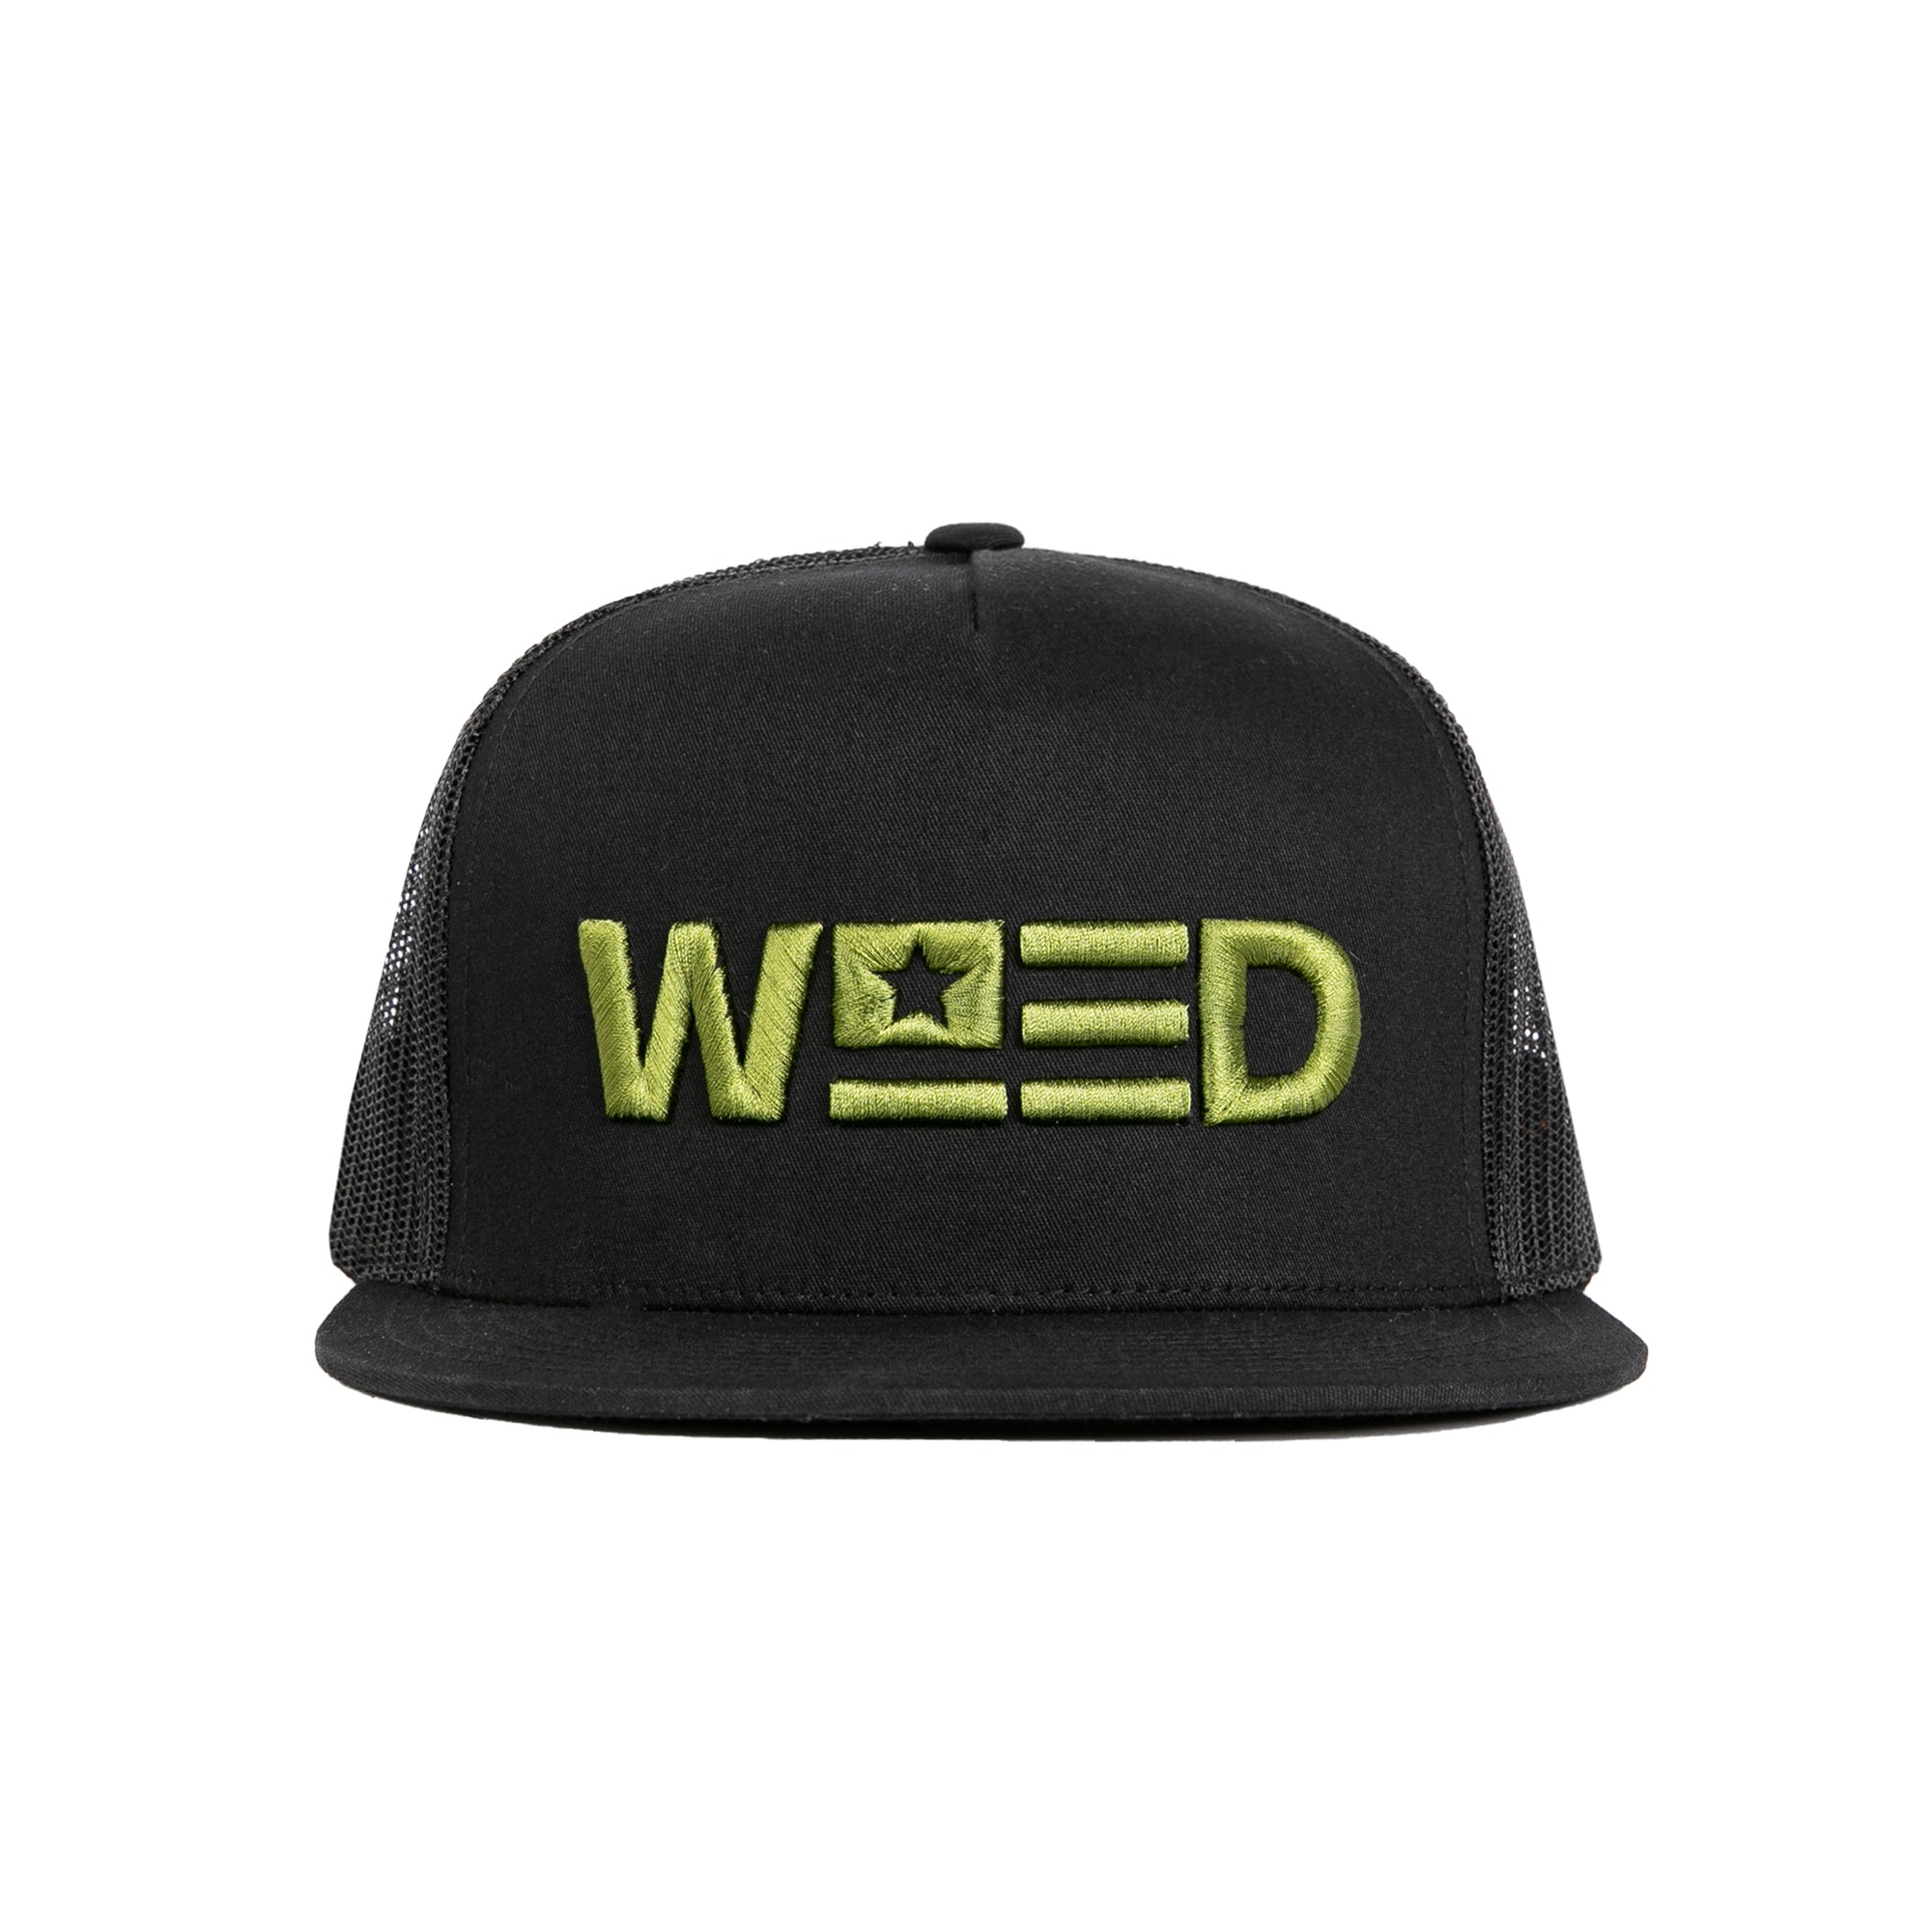 WEED FLAT BRIMMED TRUCKER HAT